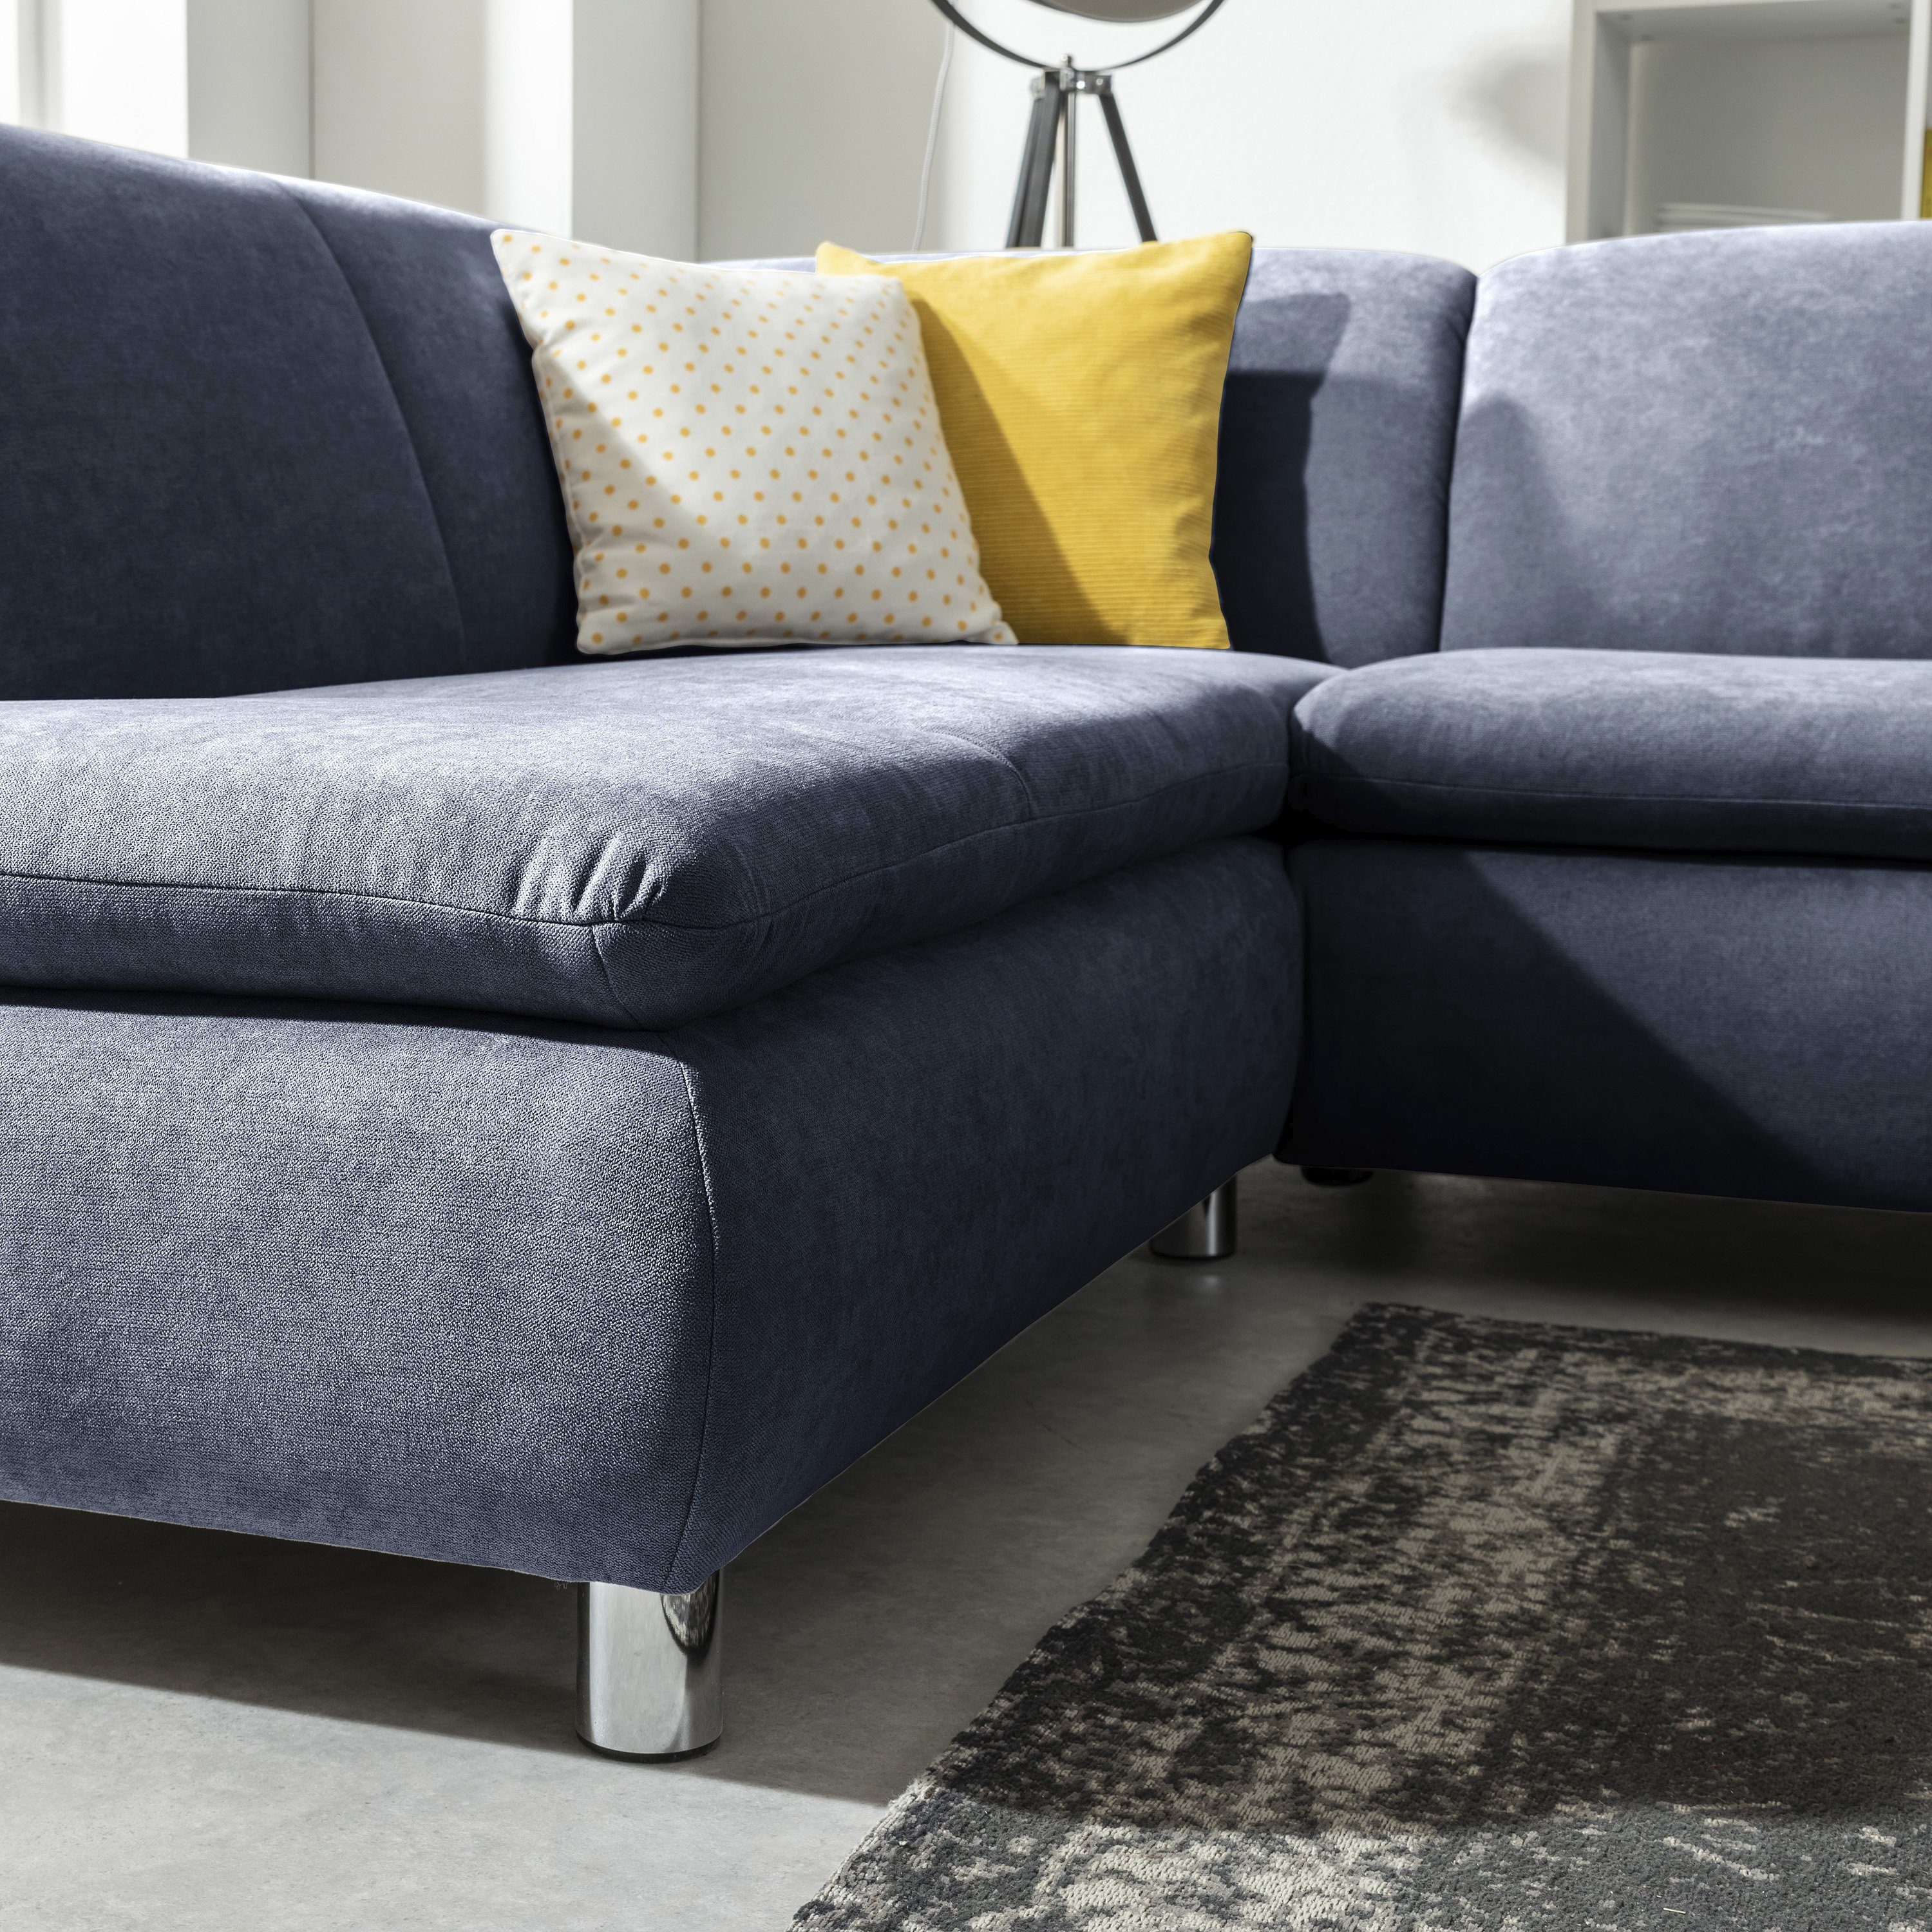 Max Winzer® Ecksofa Flachgewebe rechts mit 1 Stück, Germany in links 2,5-Sitzer Ecksofa blau, Terrence Sofa Made